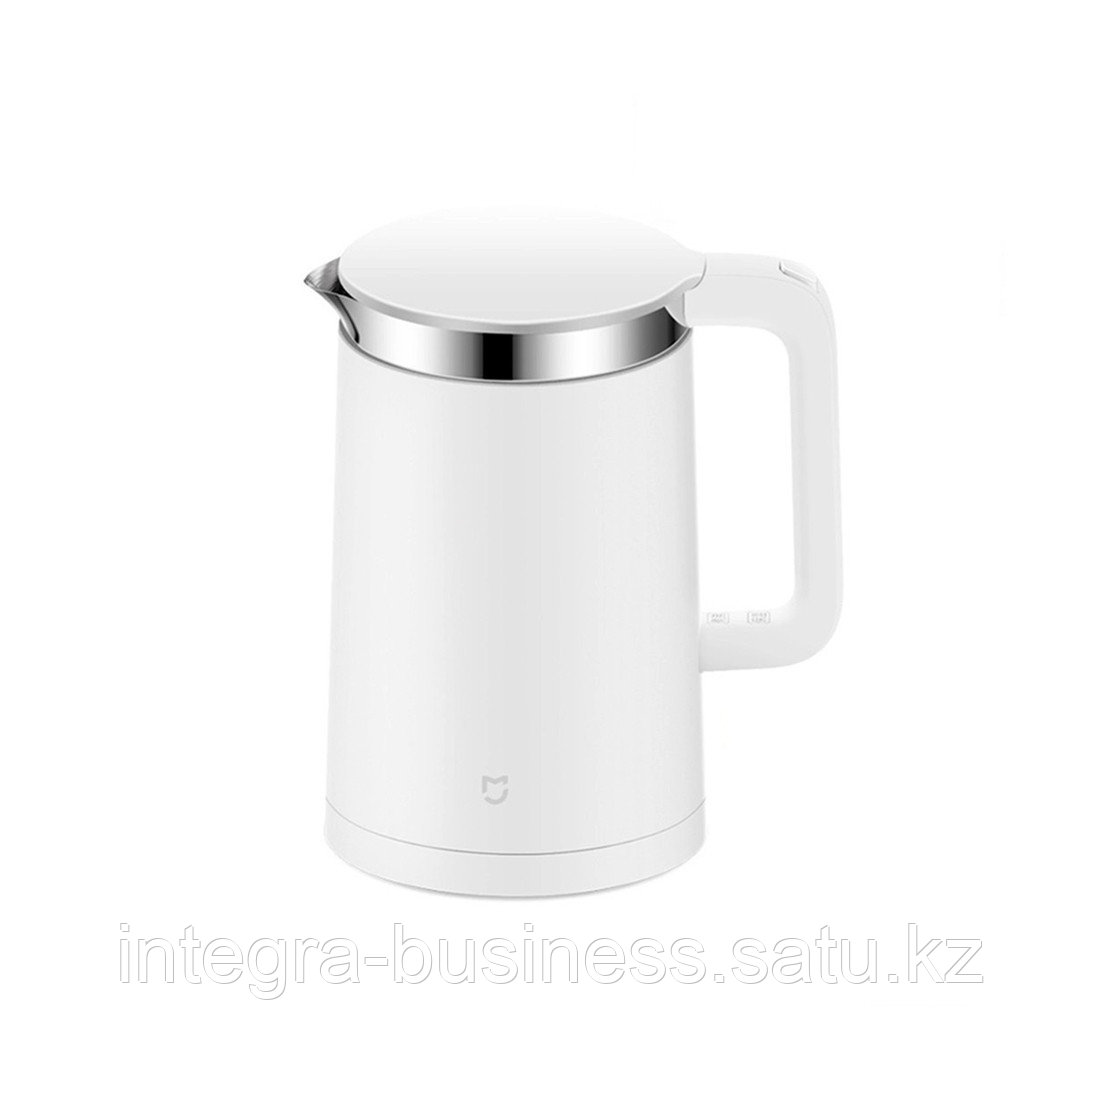 Чайник электрический MIJIA Smart Kettle (YMK1501) EU version